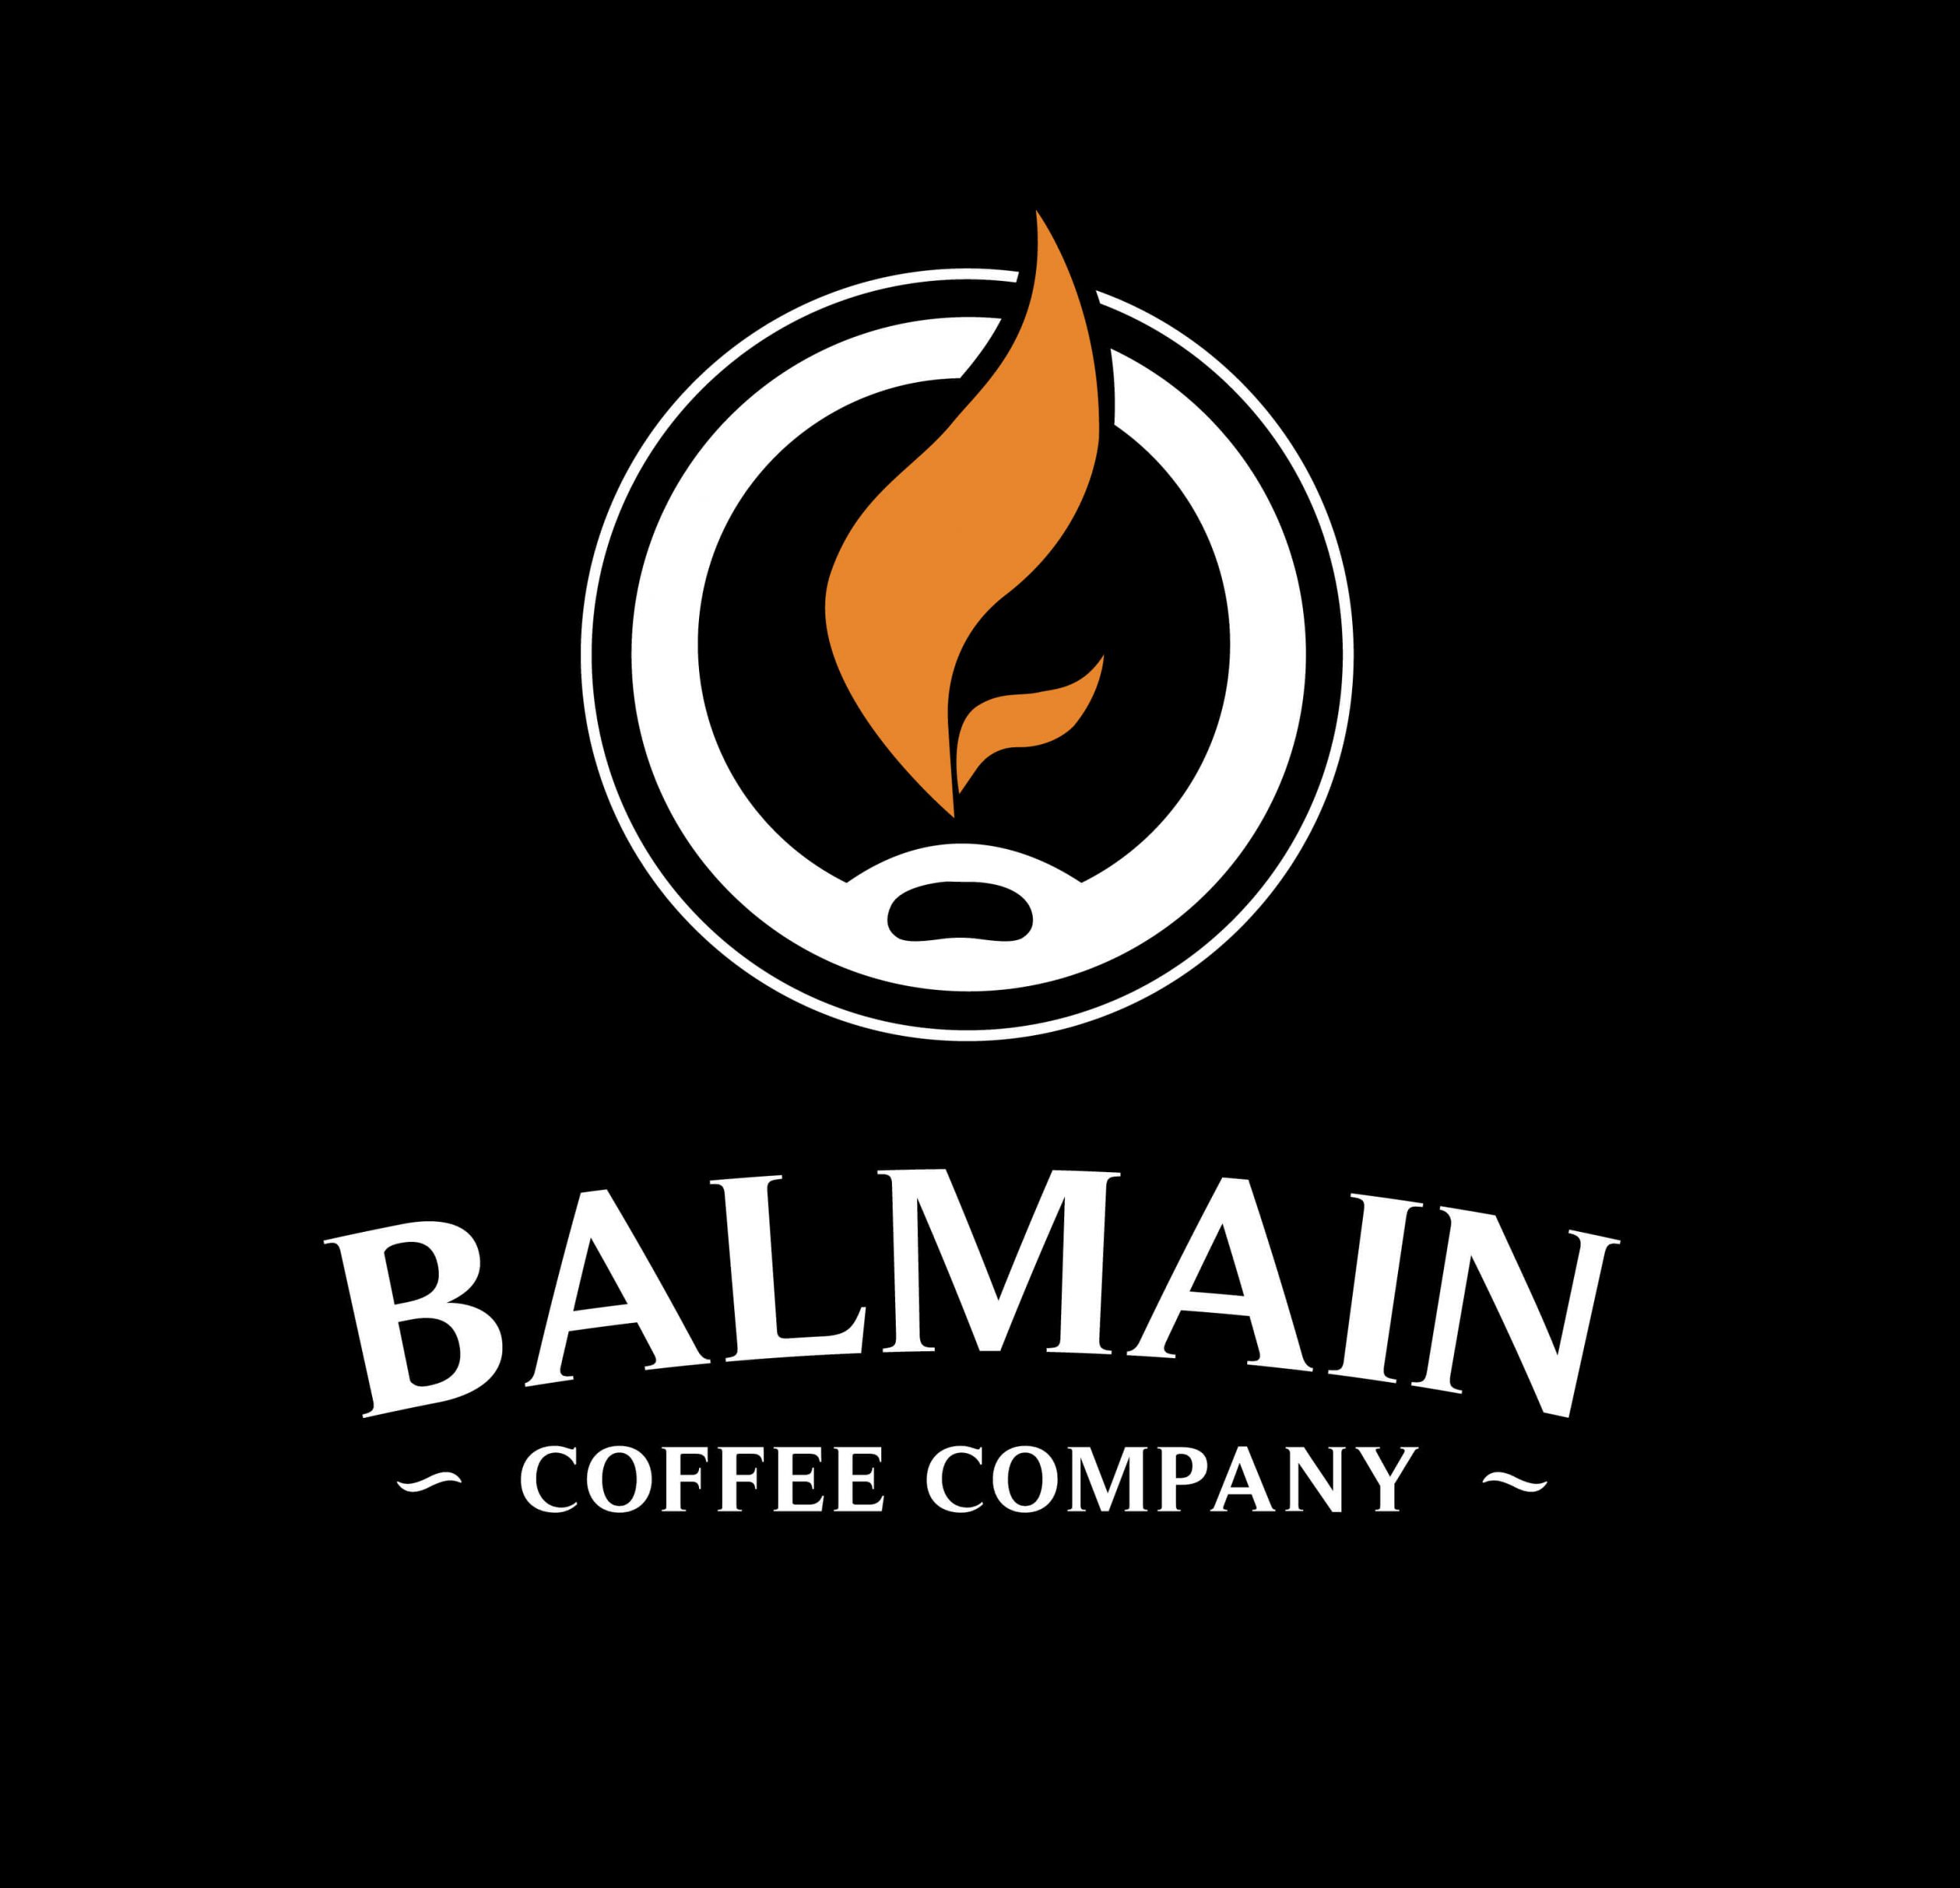 Balmain - The Dunn Group